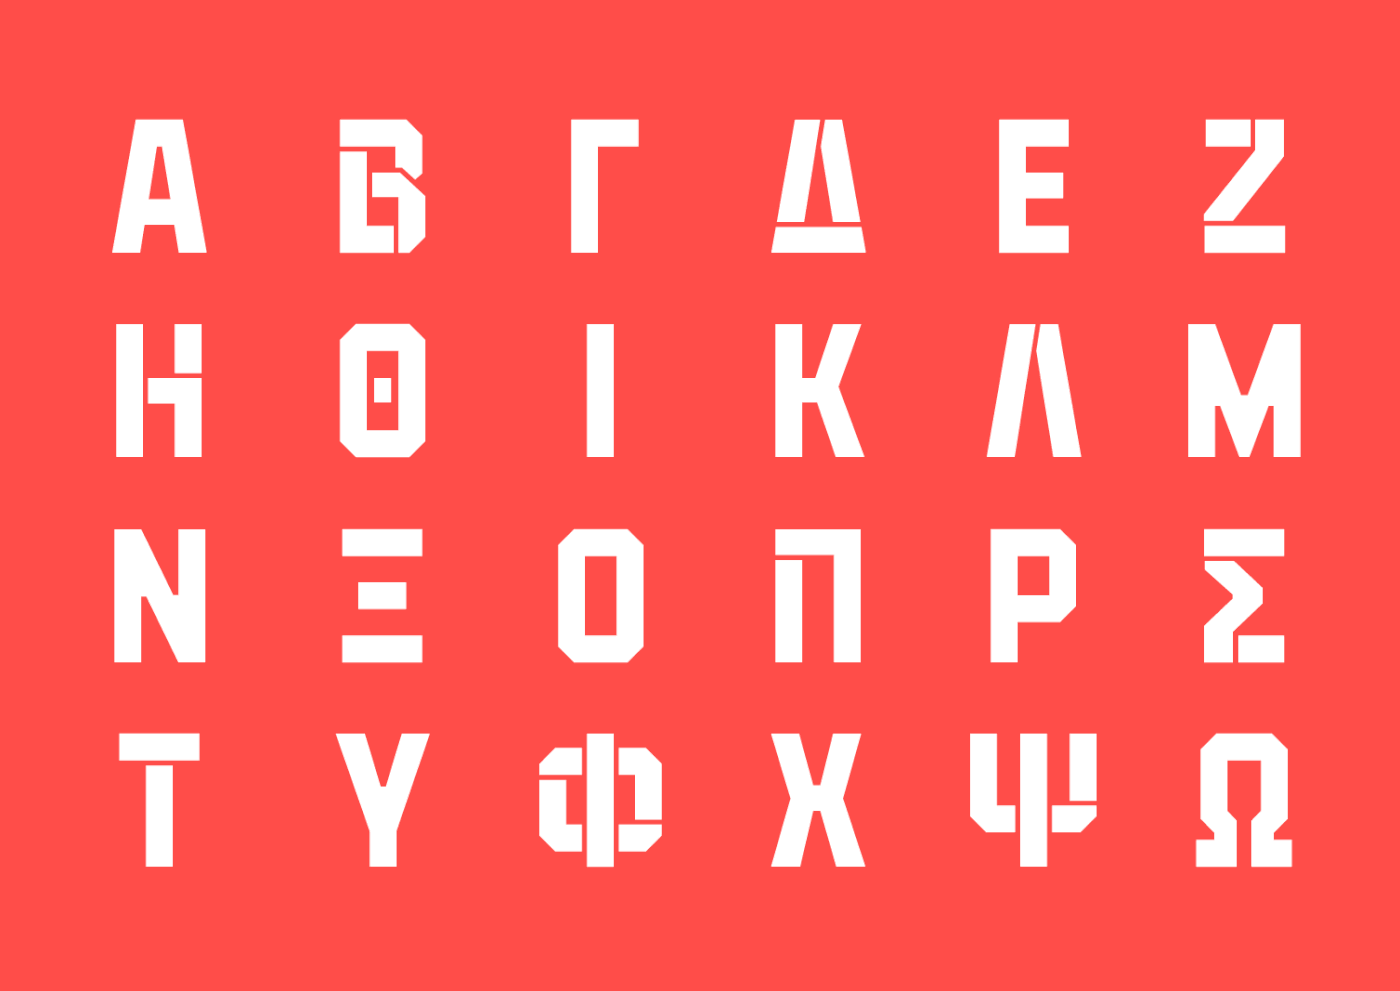 unicase font Typeface University type design Latin greek Cyrillic all caps stencil